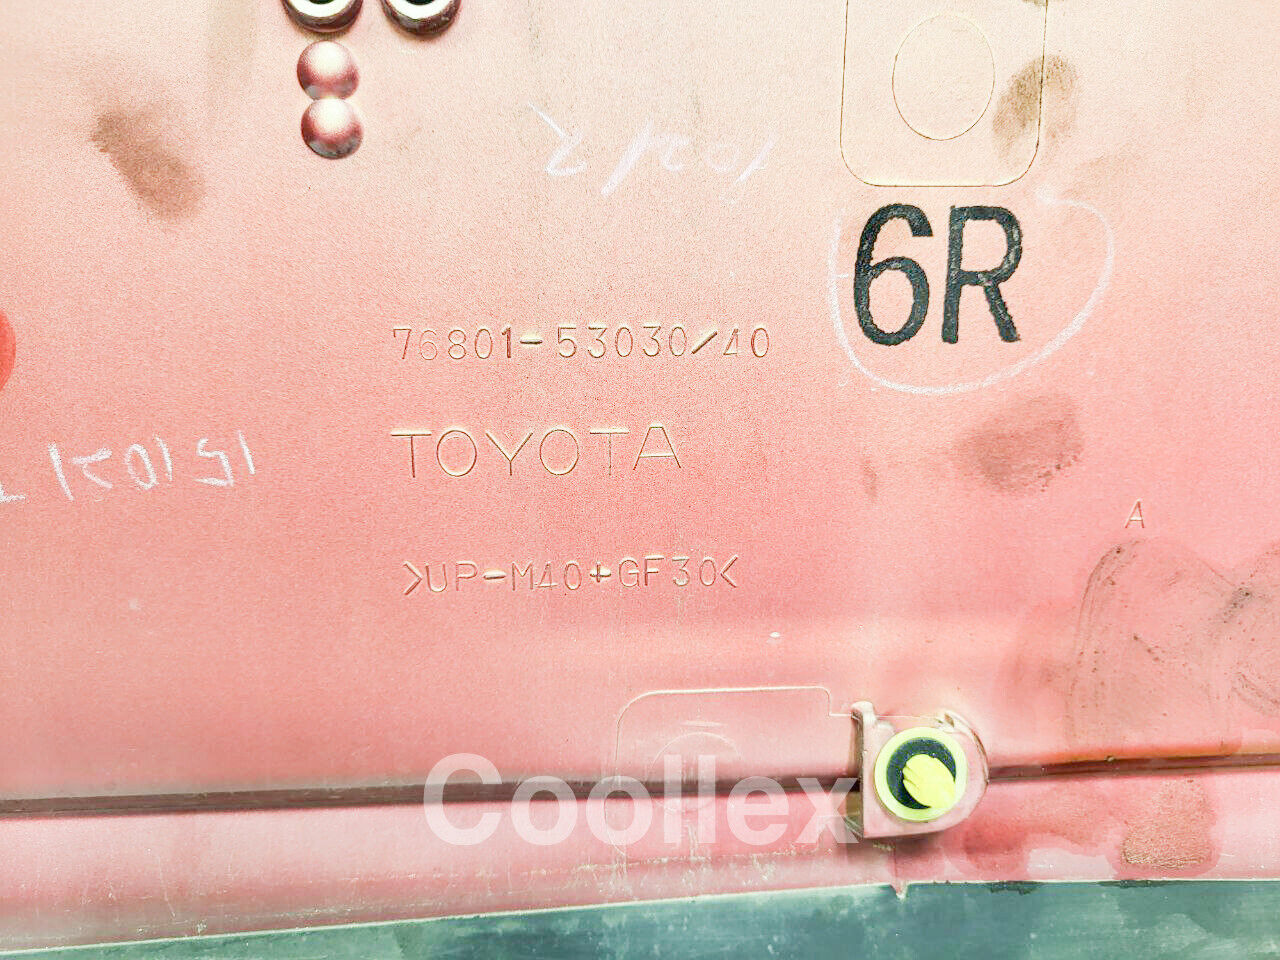 06-13 Lexus Is250 Trunk Luggage Lid License Plate Panel Red 76801-53030-D0 Oem